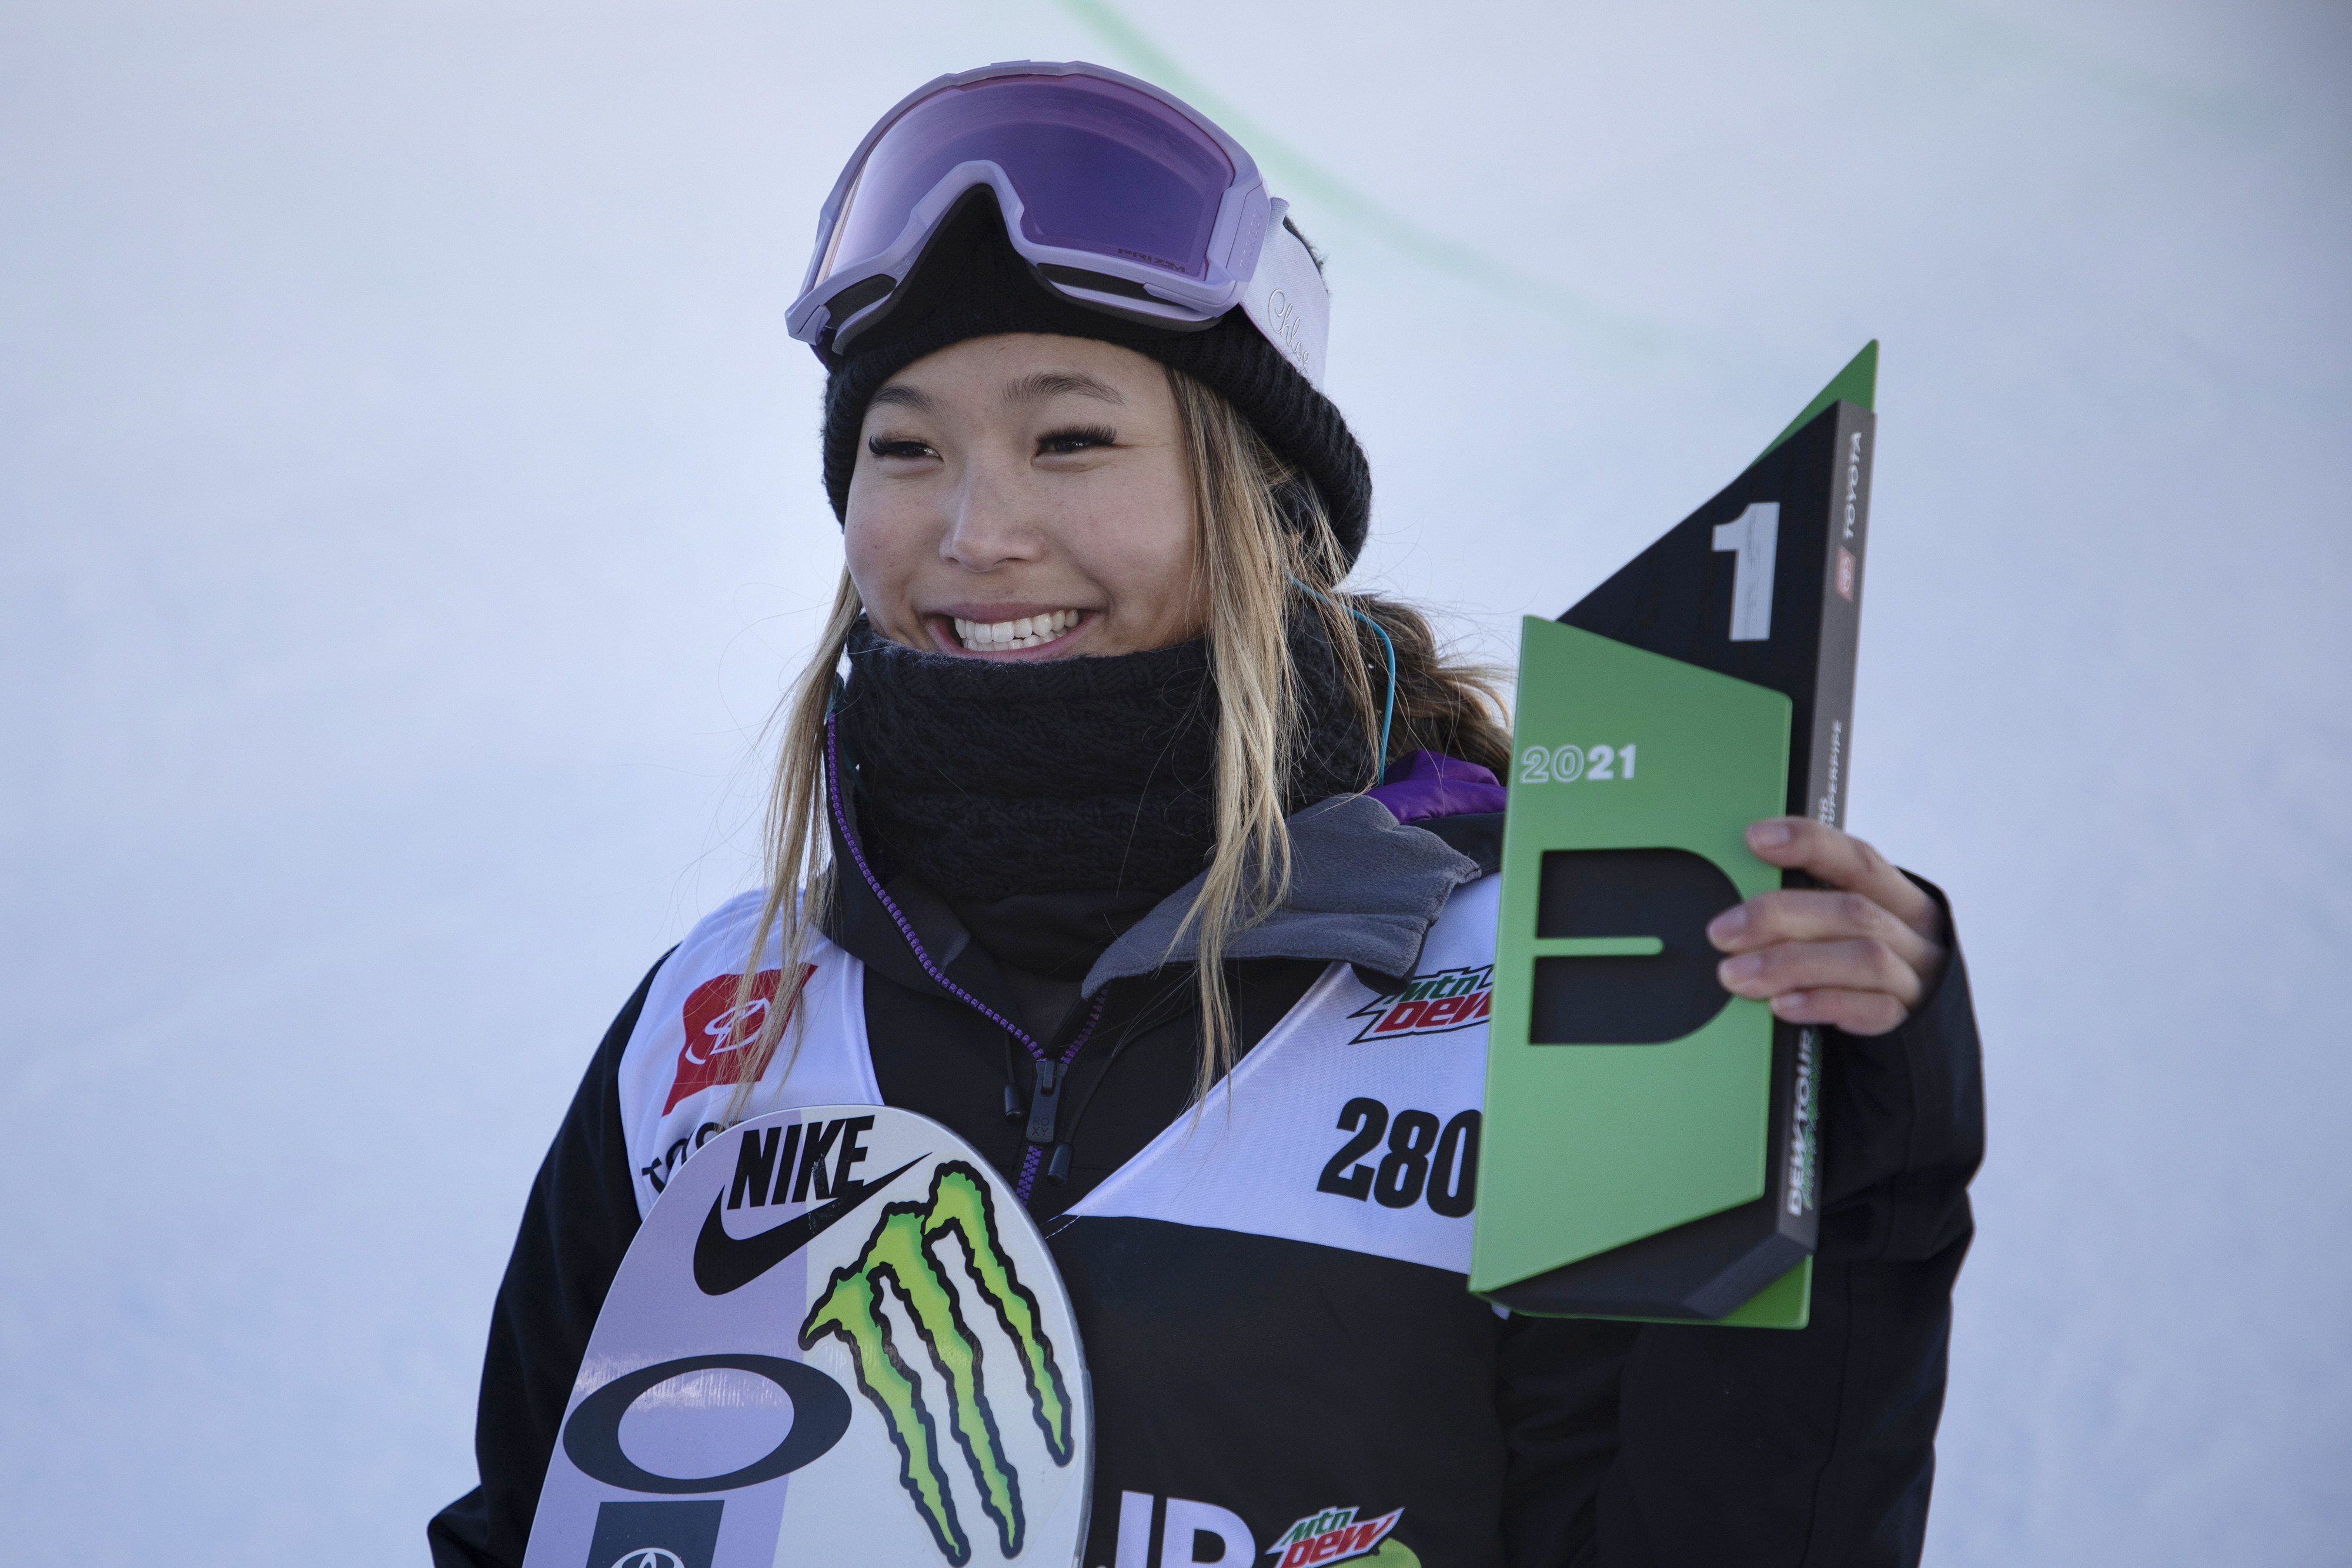 Winter US snowboarding star Chloe Kim seeks golden repeat at Beijing 2022 | South China Morning Post